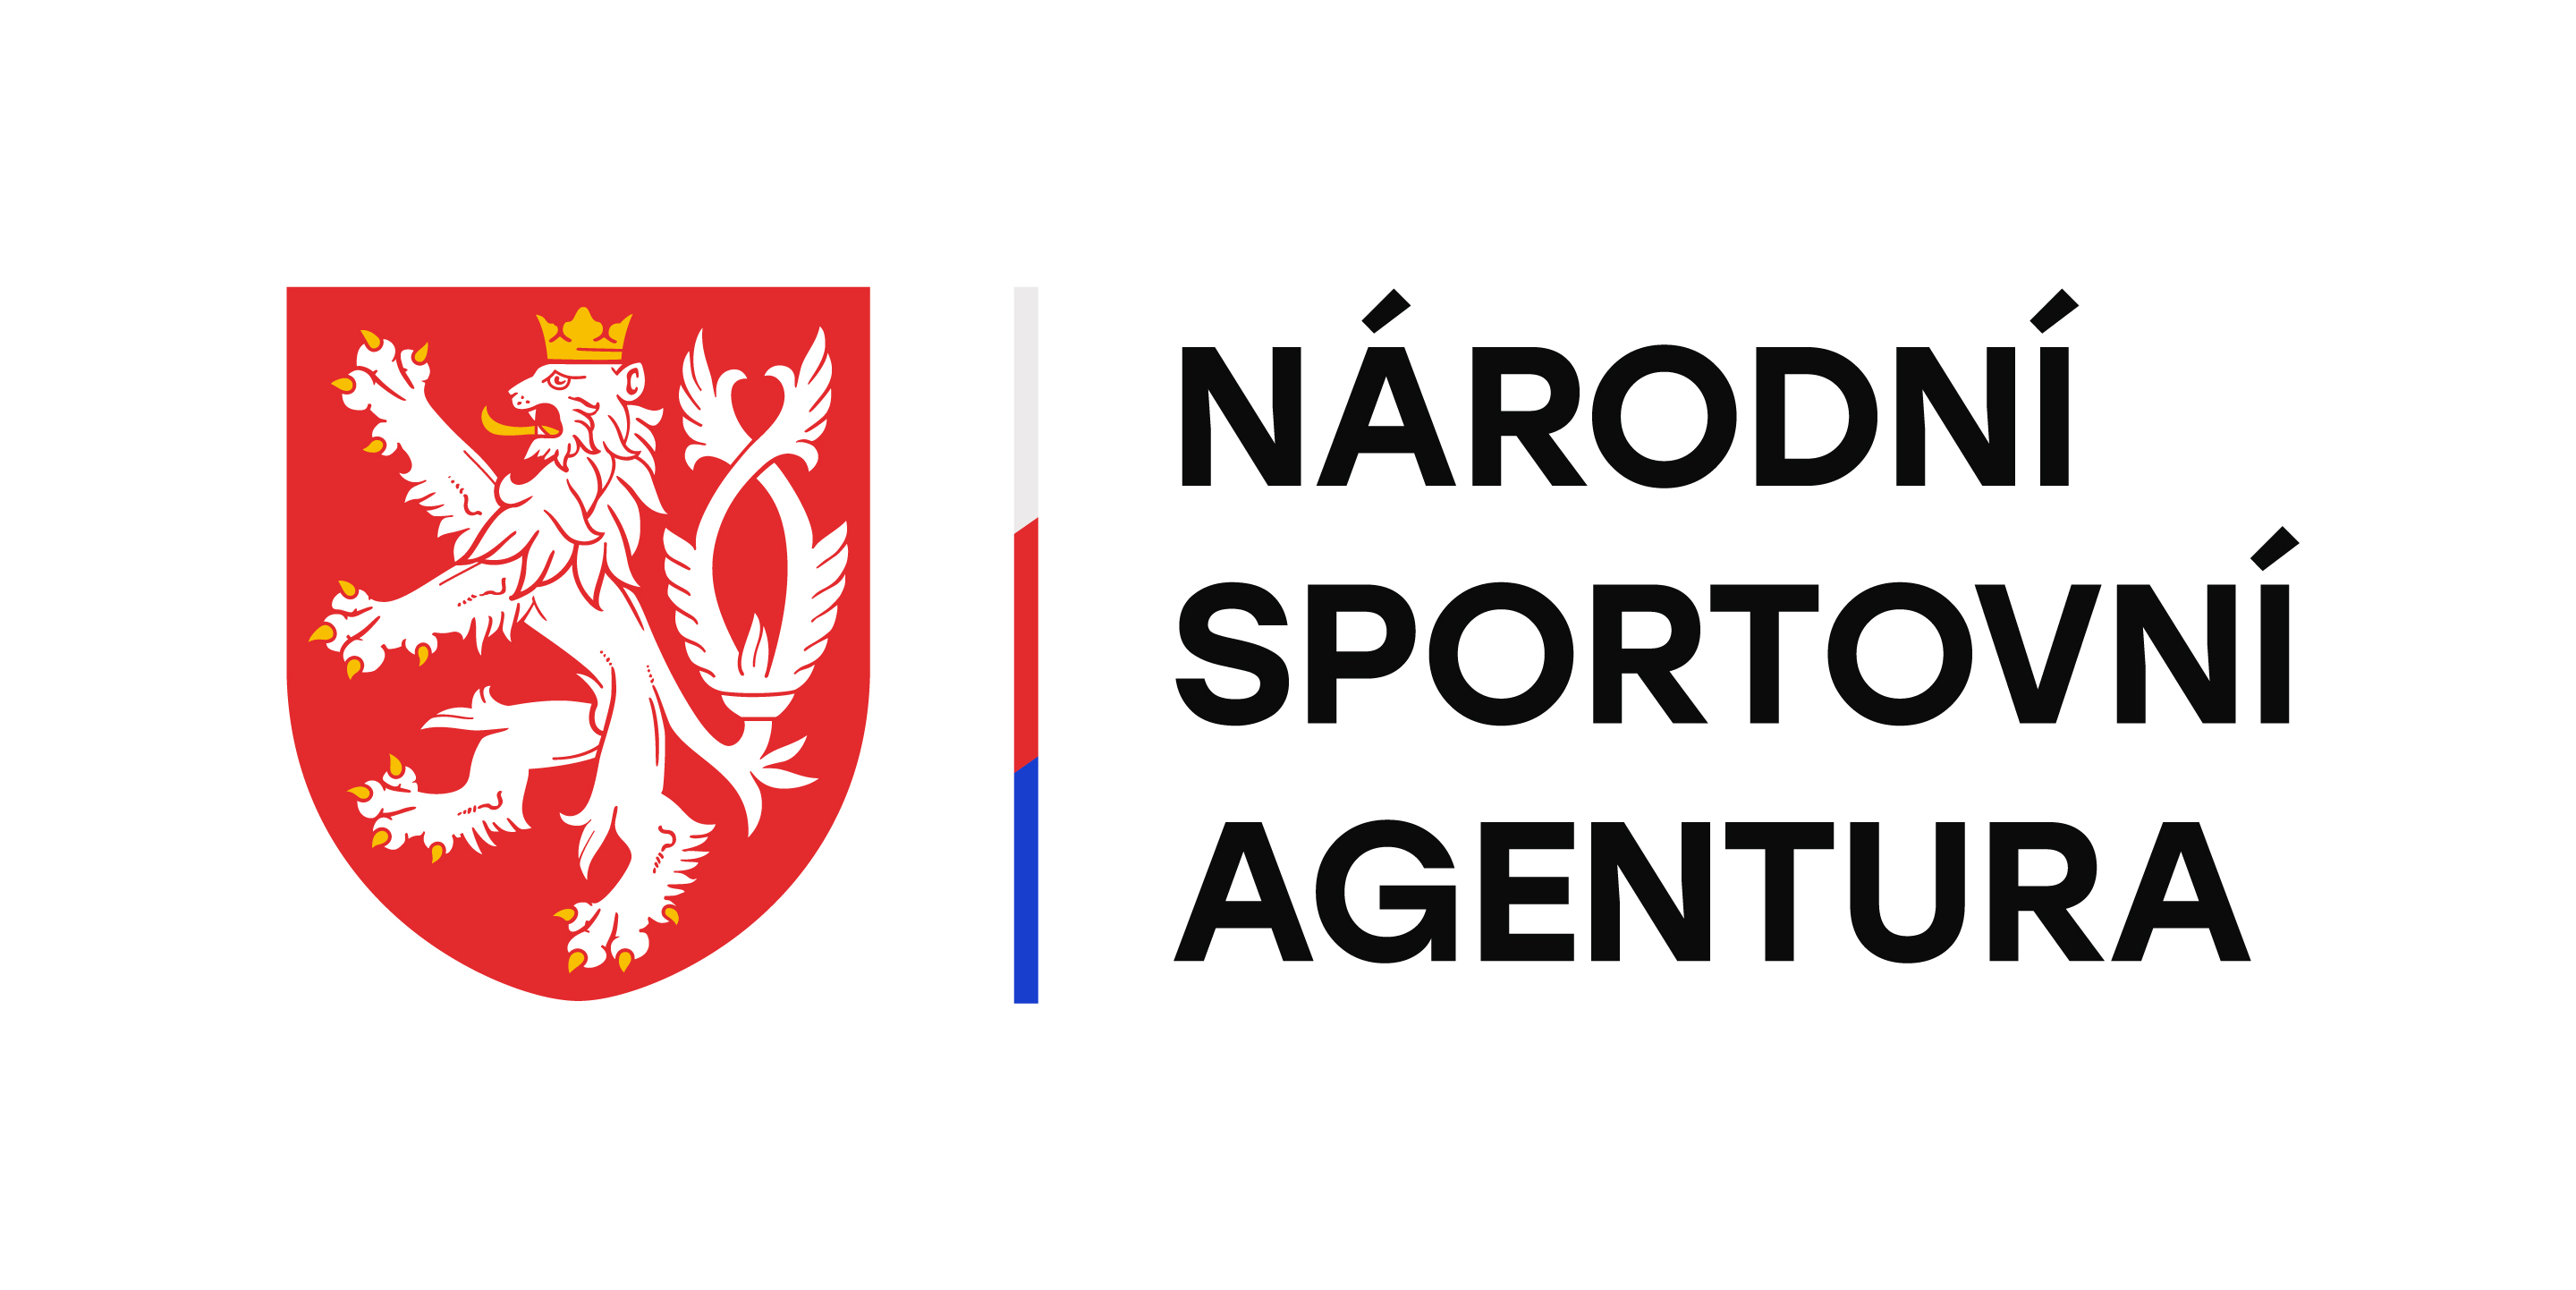 Narodni sportovni agentura logo rgb